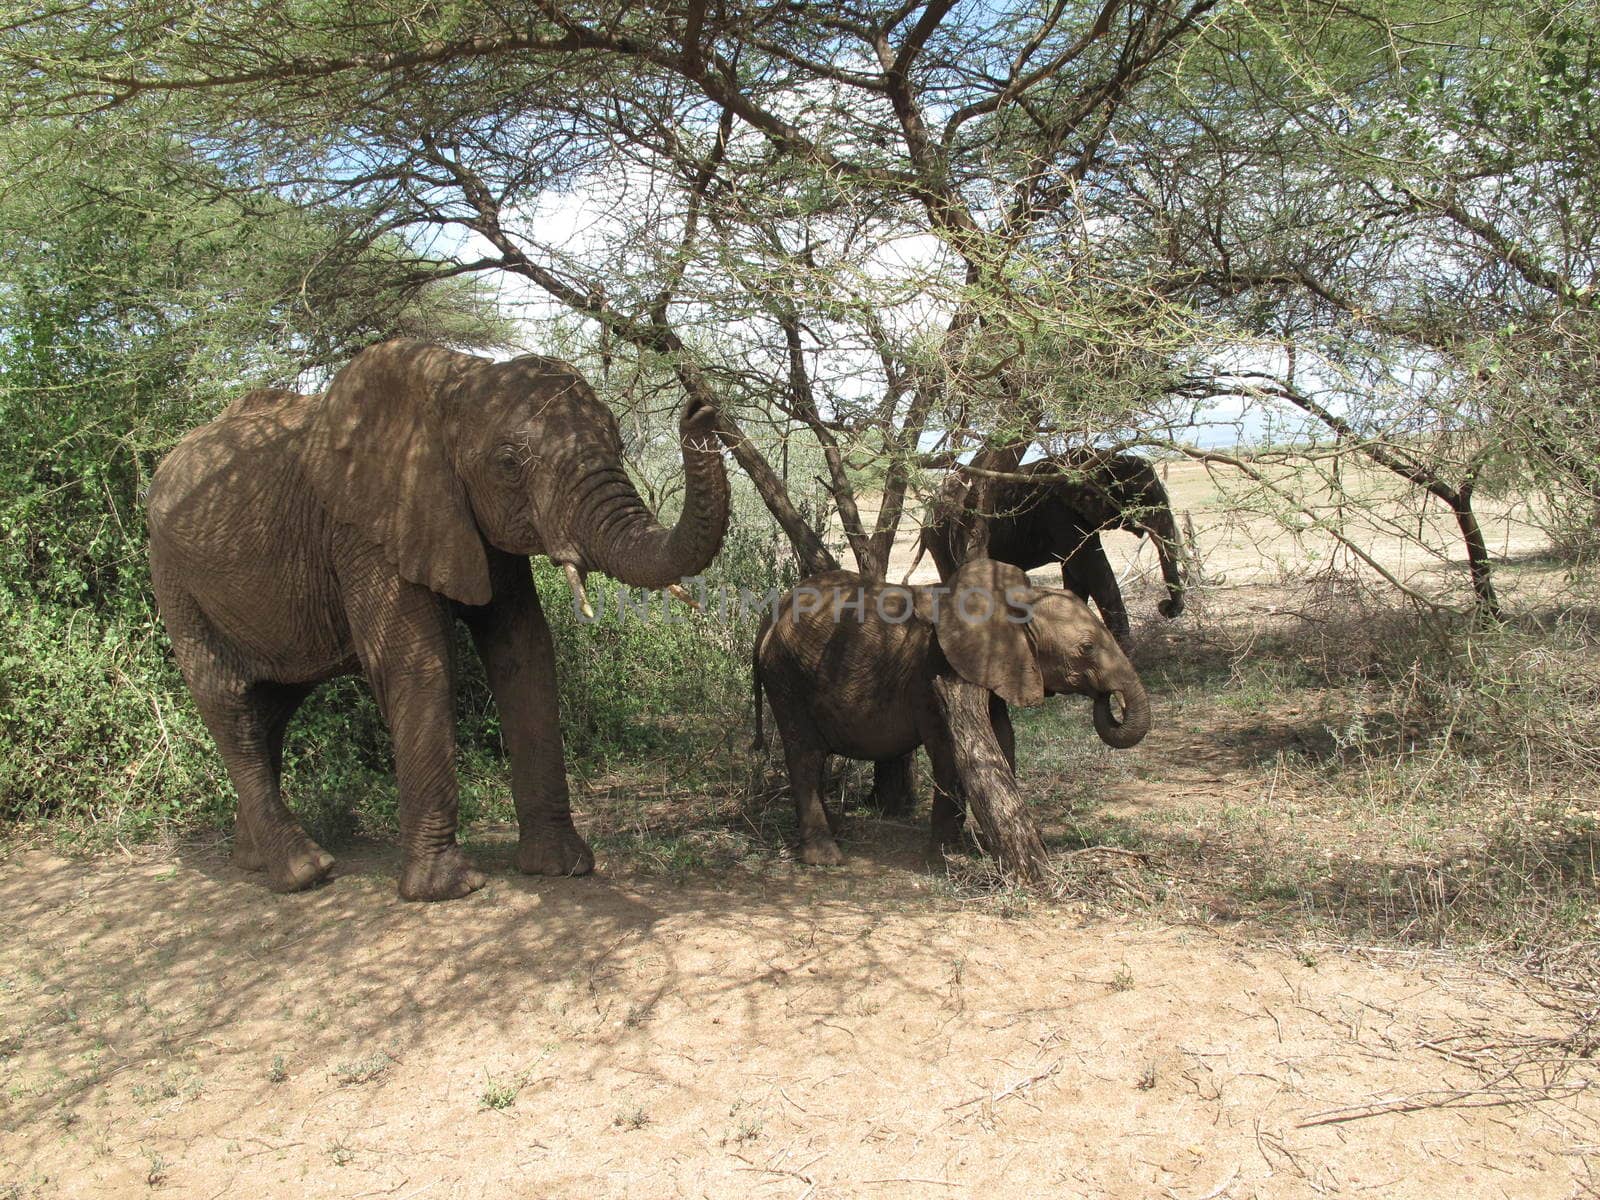 Wild Elephant (Elephantidae) in African Botswana savannah by desant7474